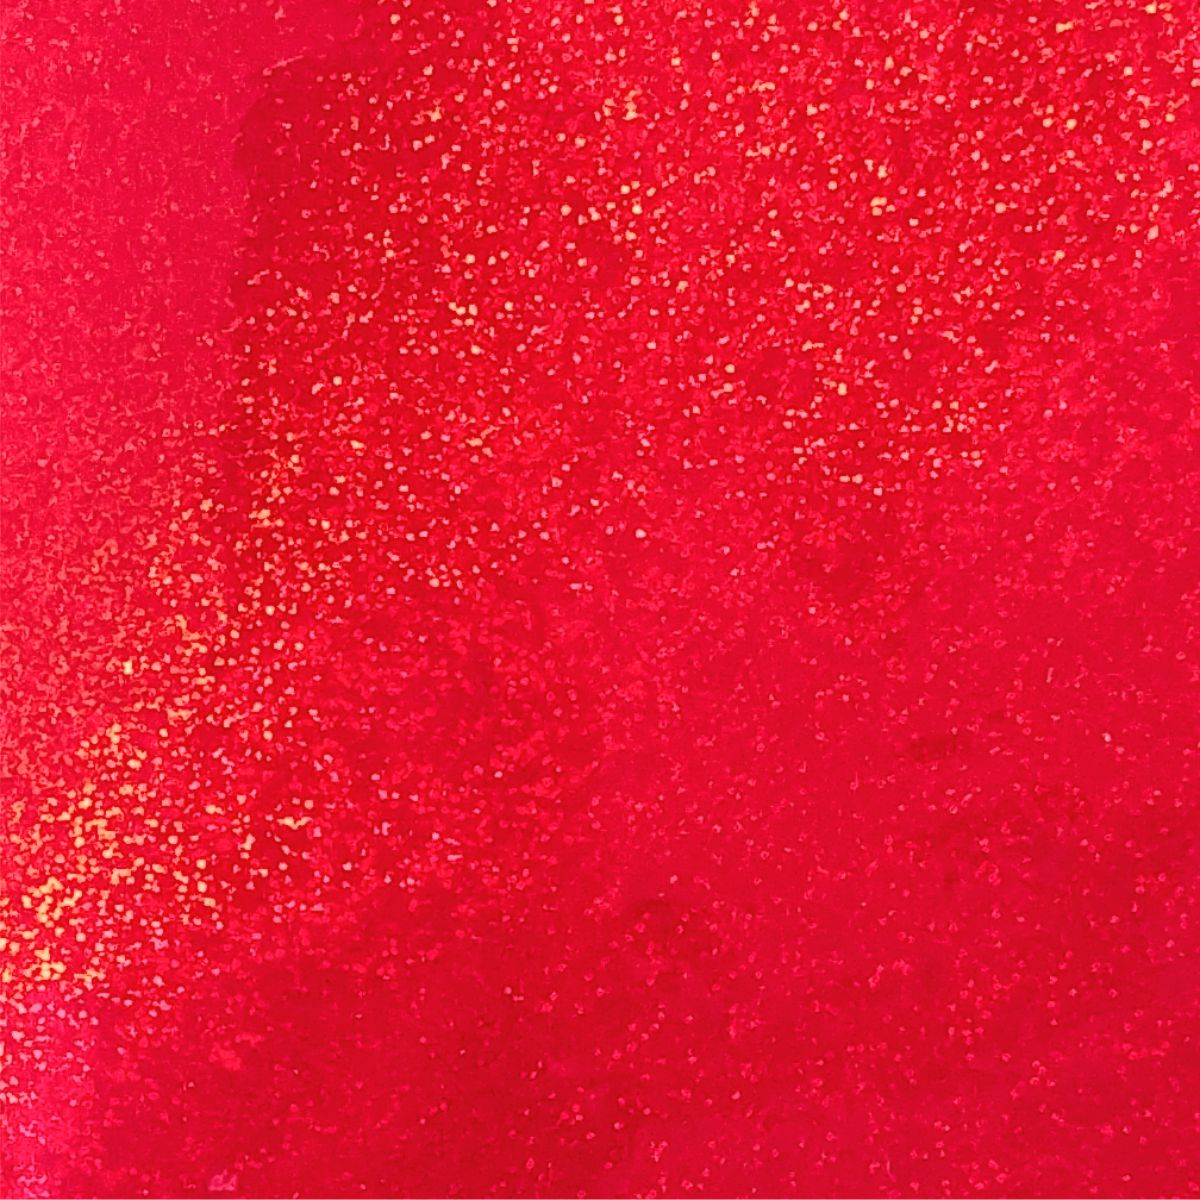 Holo Glitter Cherry Red - CraftCutterSupply.com